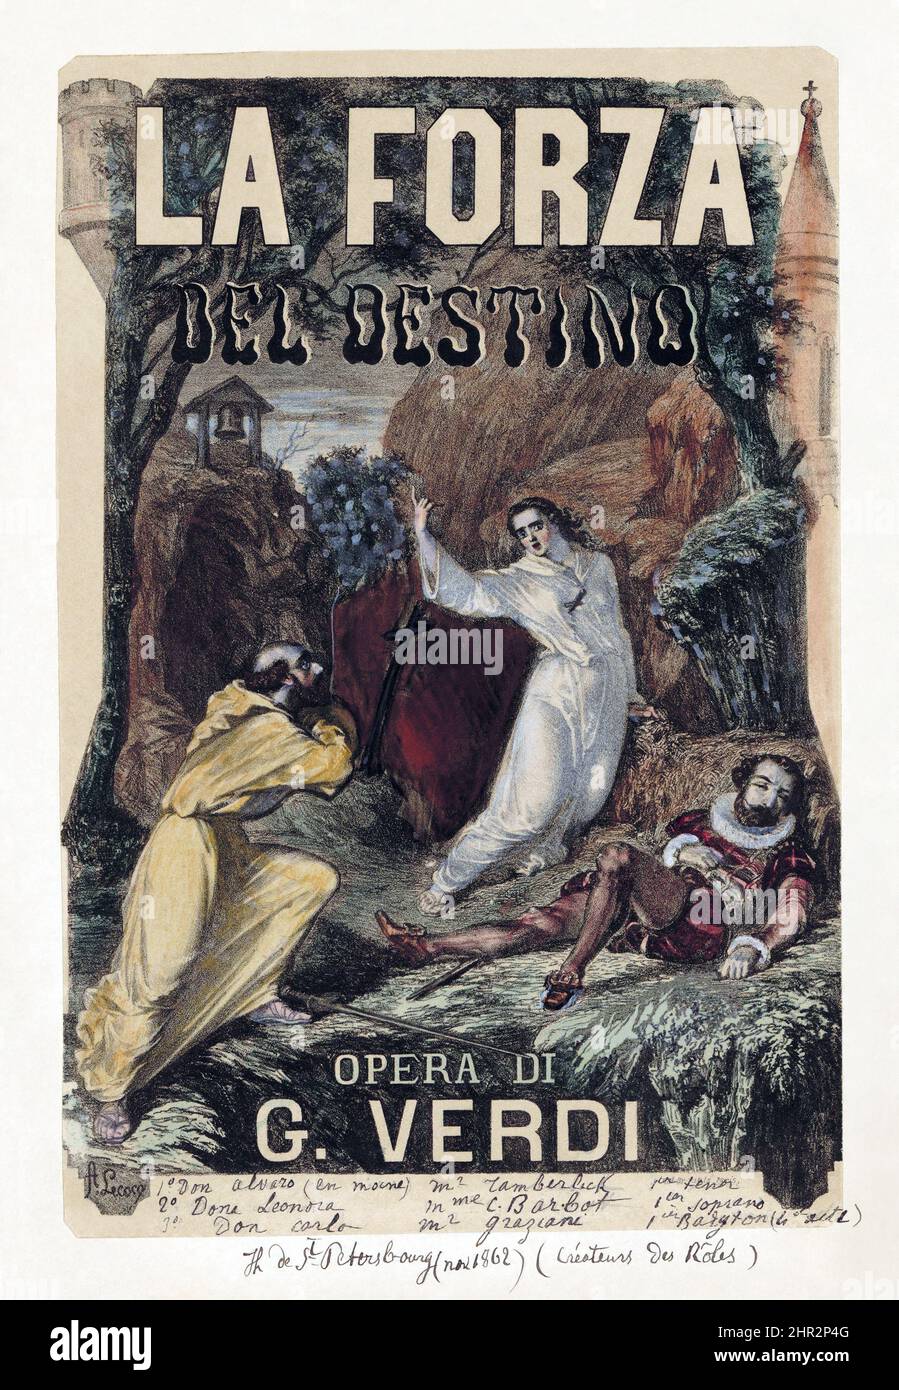 Alexandre Charles Lecocq - Giuseppe Verdi - La forza del destino - vintage advertisement poster. 1862-1880. Stock Photo